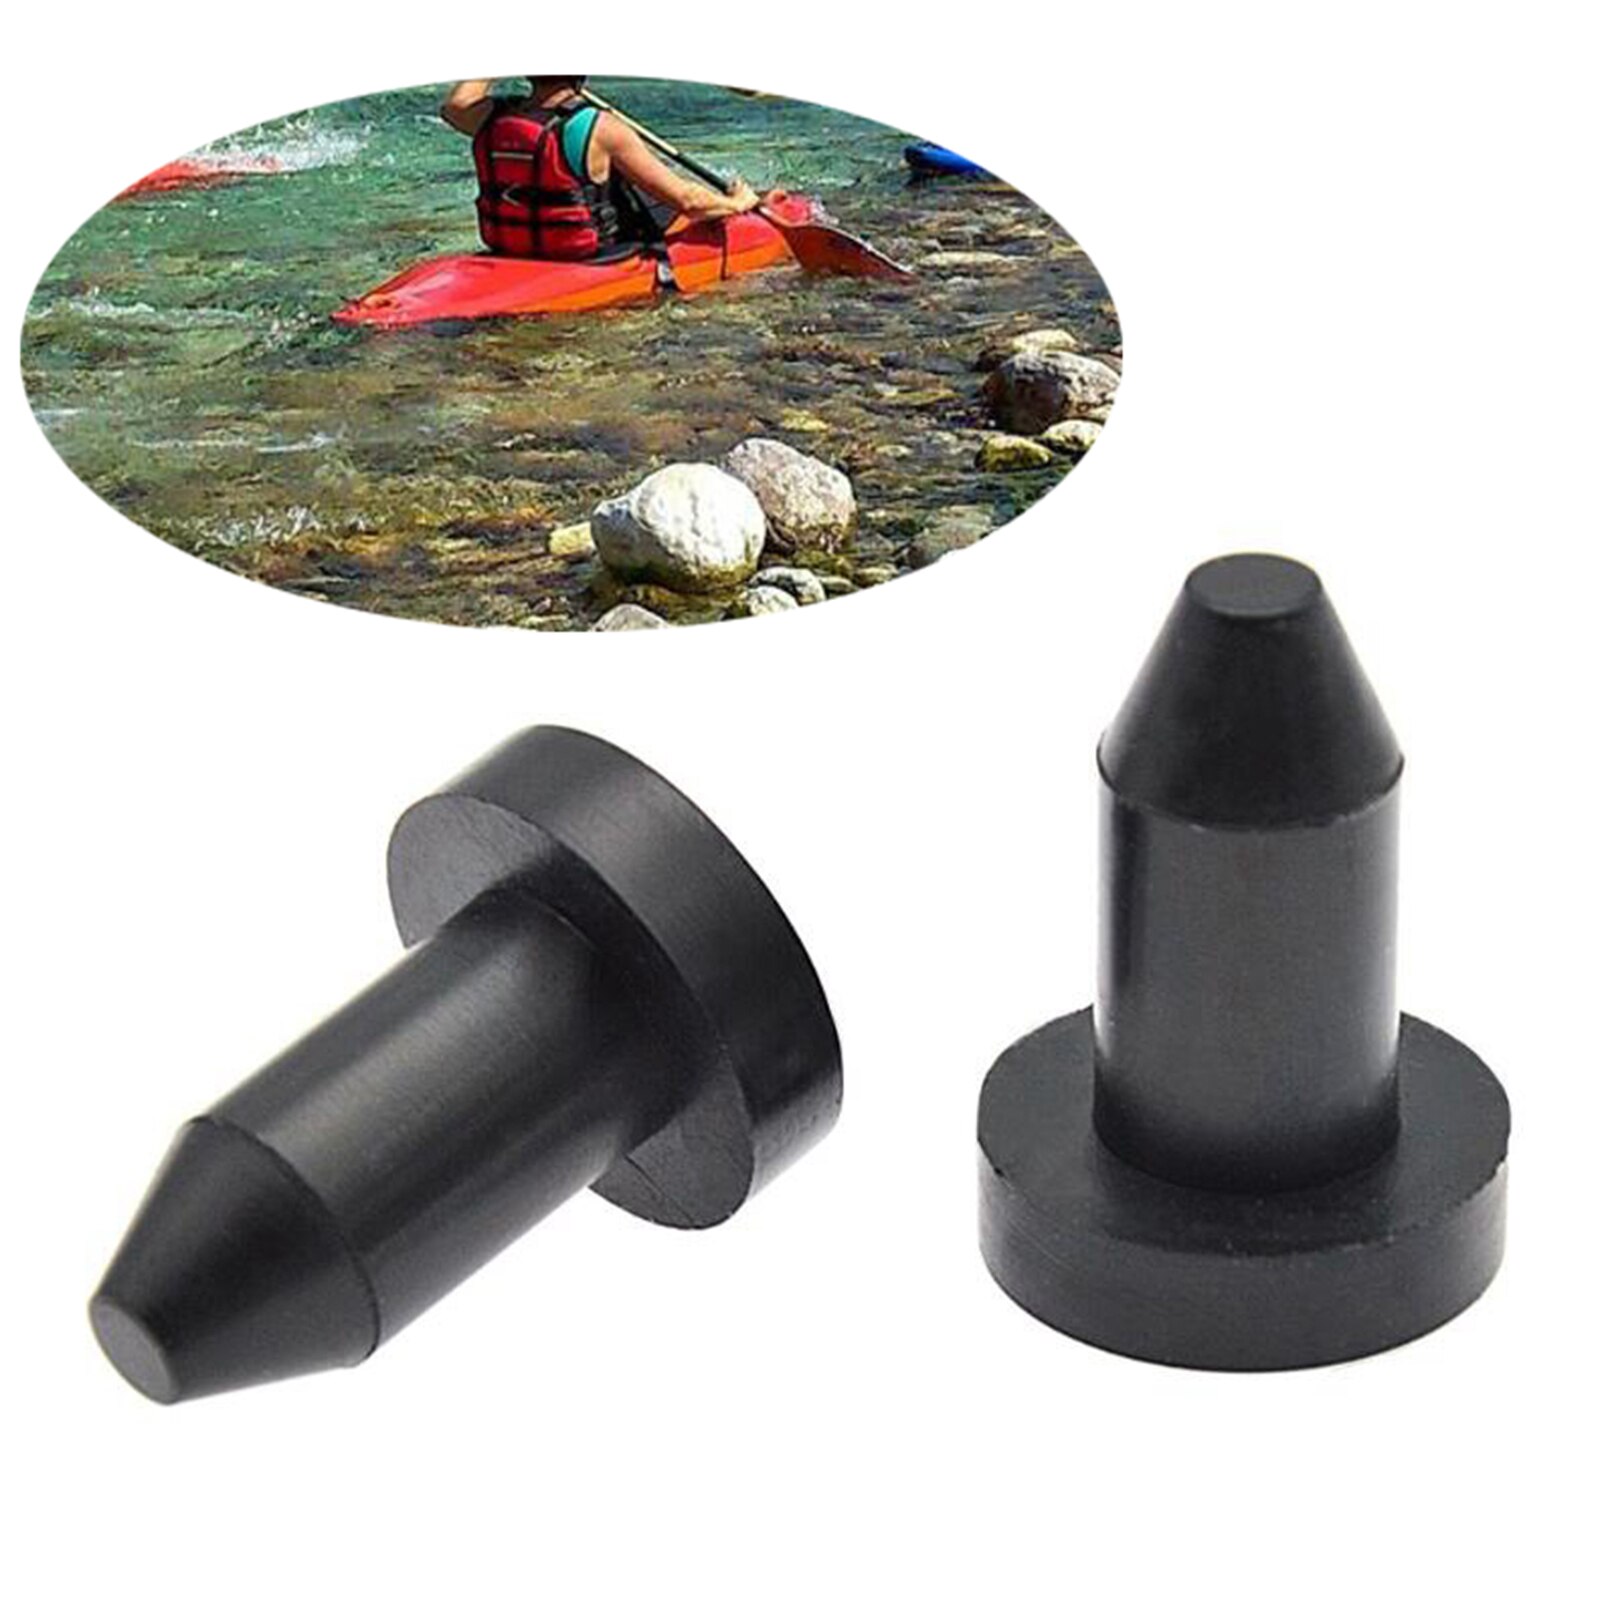 2Pcs Kayak Kano Marine Boot Scupper Plug In Afvoer Gaten Stopper Stekkers Kit Voor Zon Dolfijn Kajaks